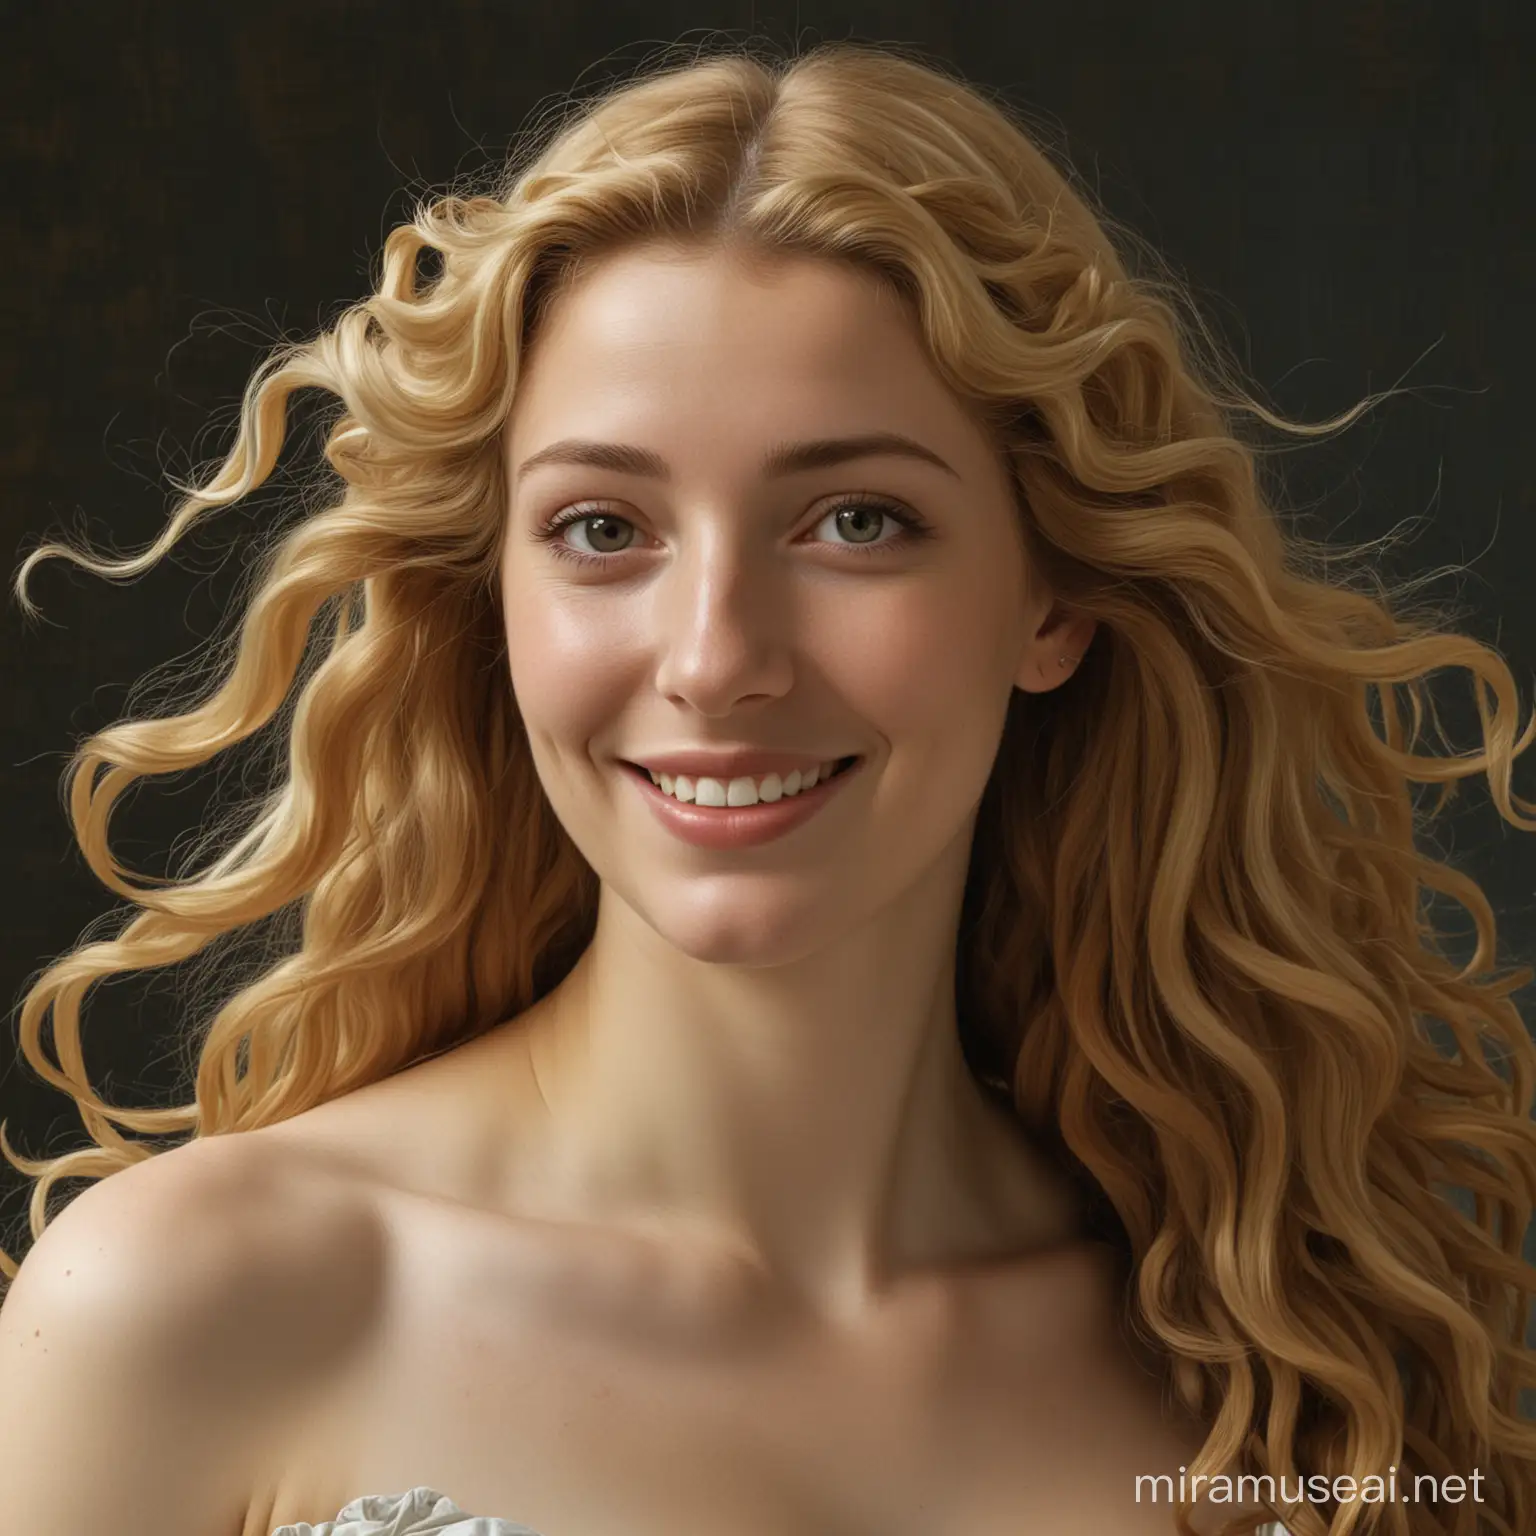 Smiling White Woman with Long Dark Hair in Botticellis Venus Style